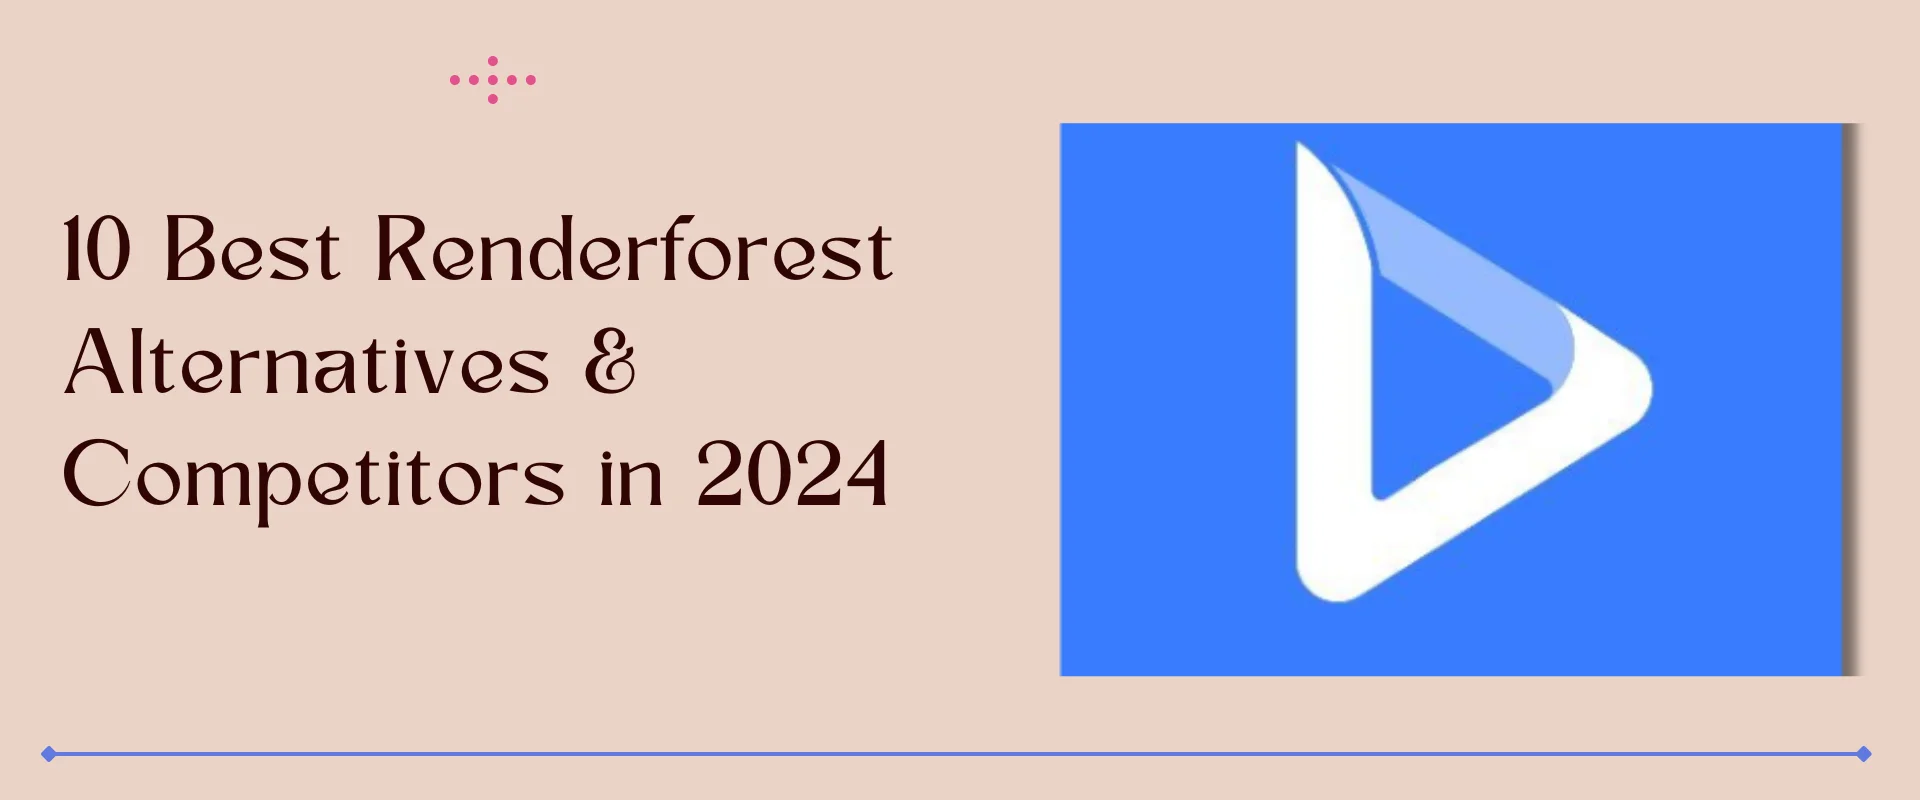 10 Best Renderforest Alternatives & Competitors in 2024